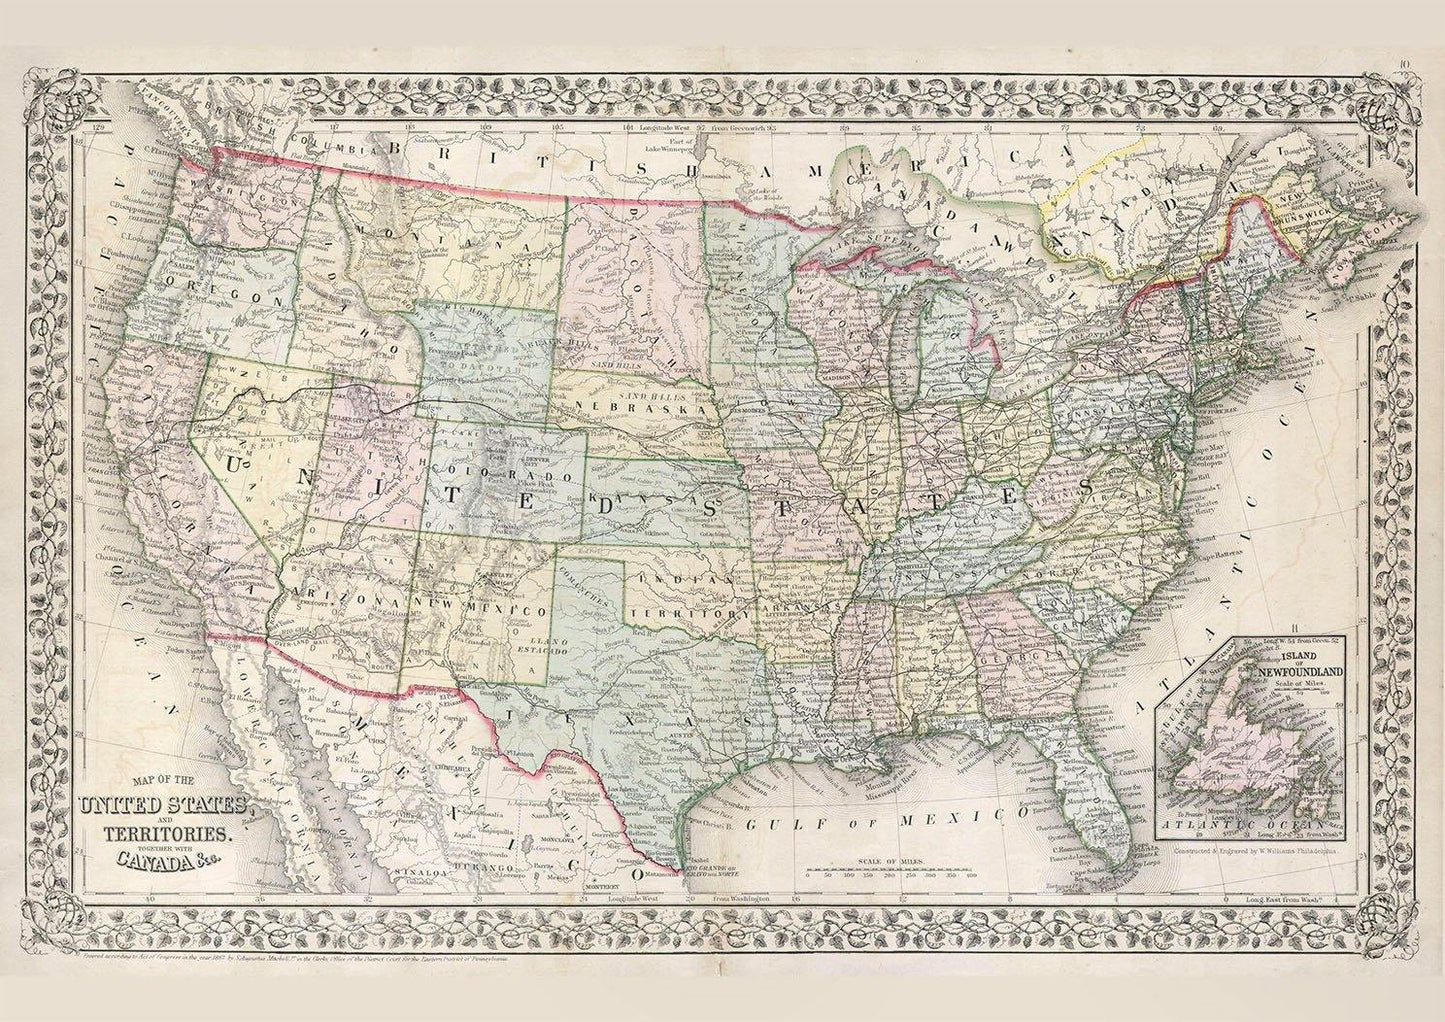 AMERICA MAP: Vintage USA Atlas Art Print - Pimlico Prints